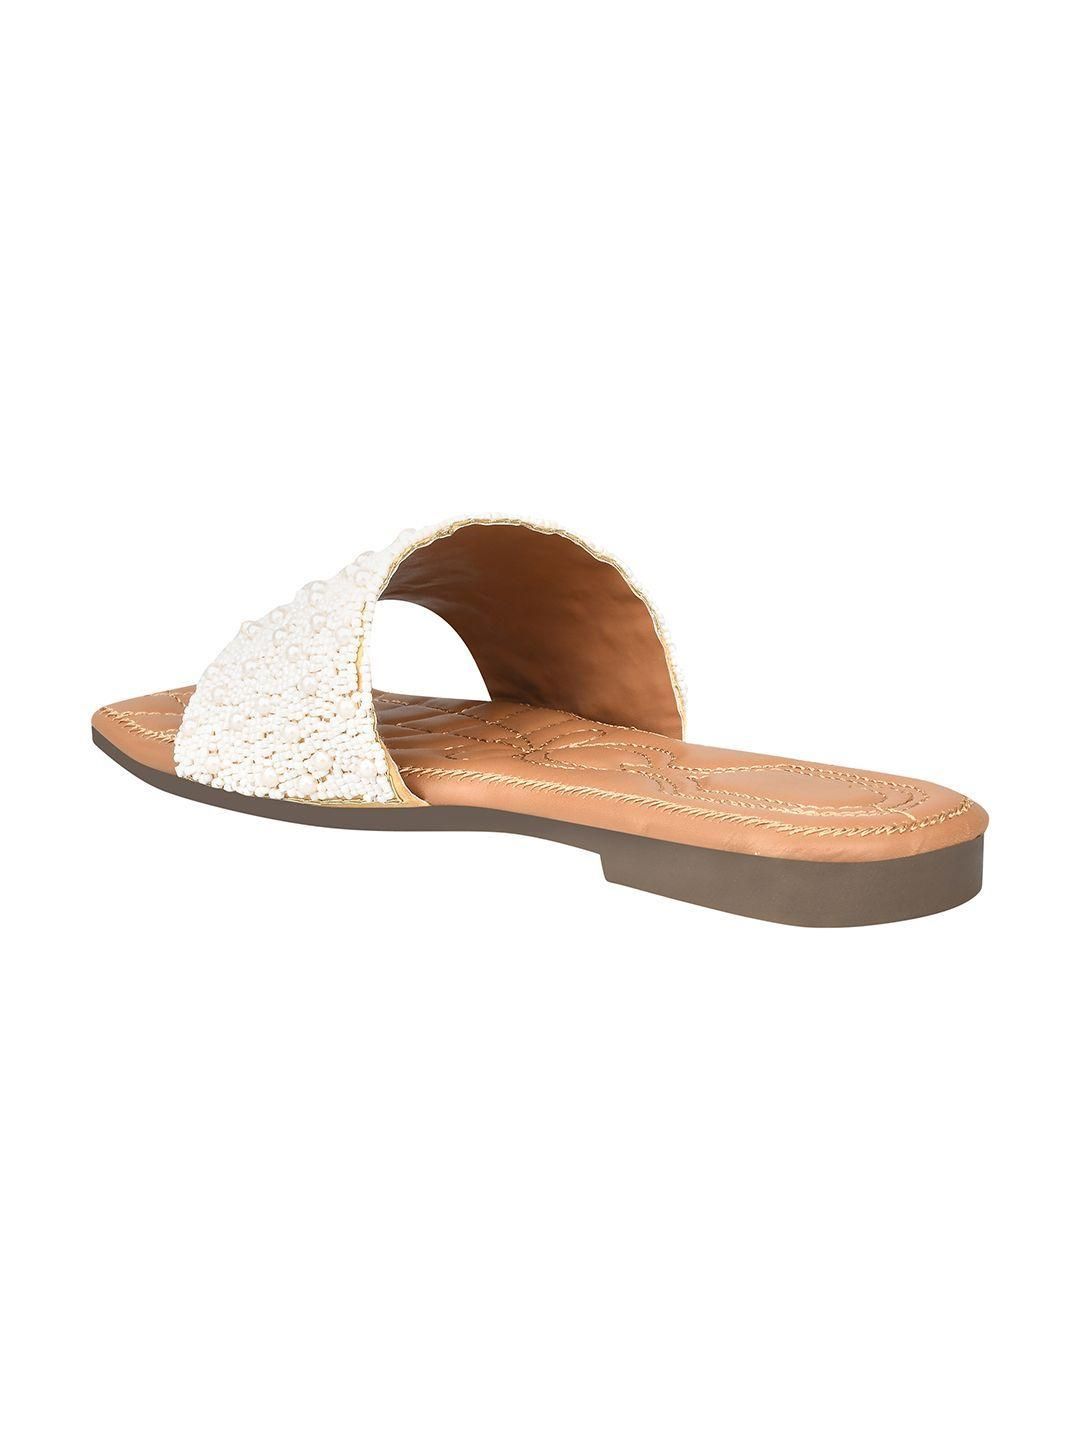 Comfortable & Stylish Flat Sandal For Women's